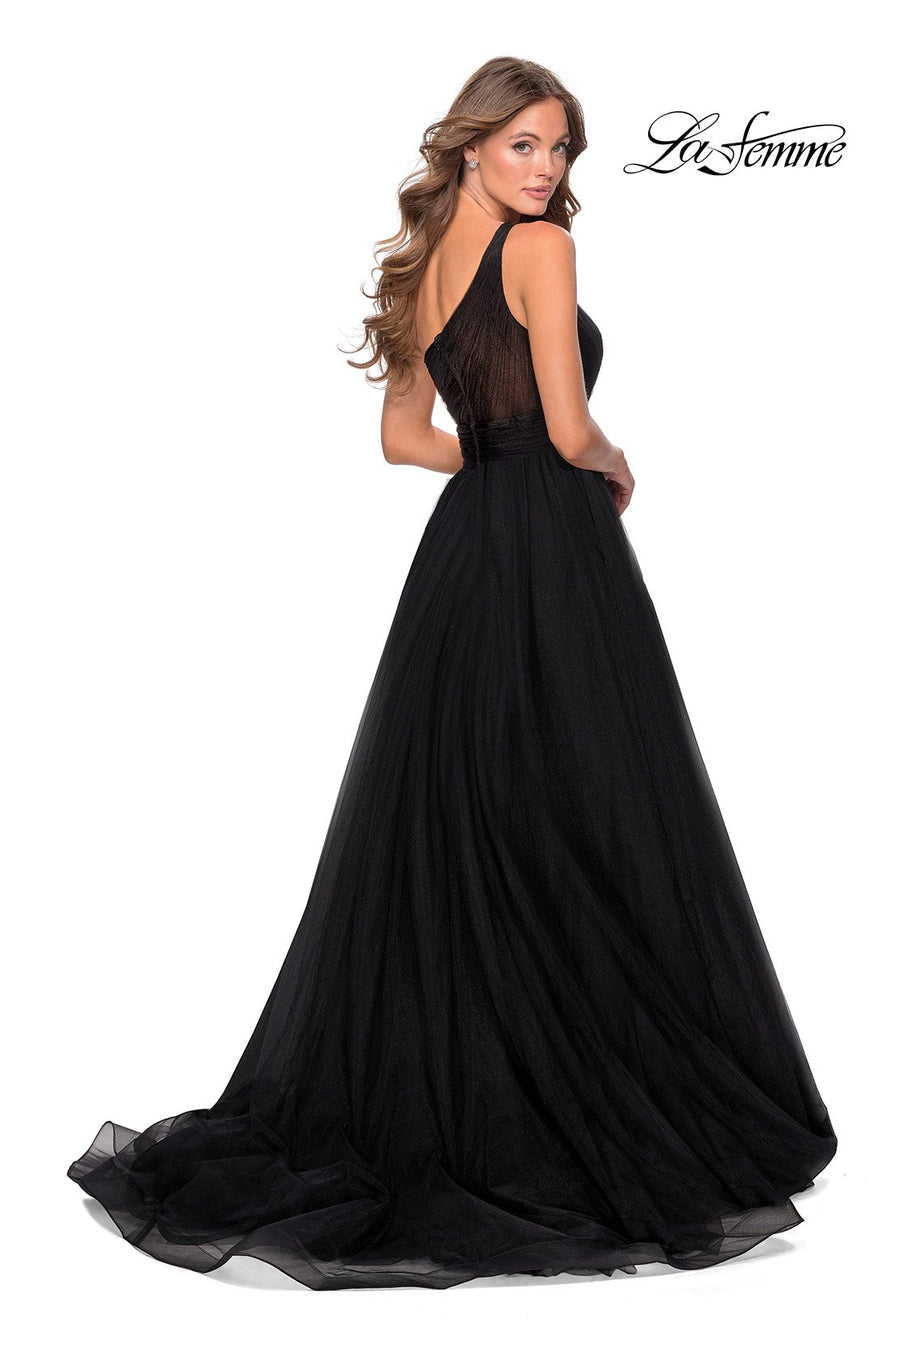 La Femme 28383 prom dress images.  La Femme 28383 is available in these colors: Black.